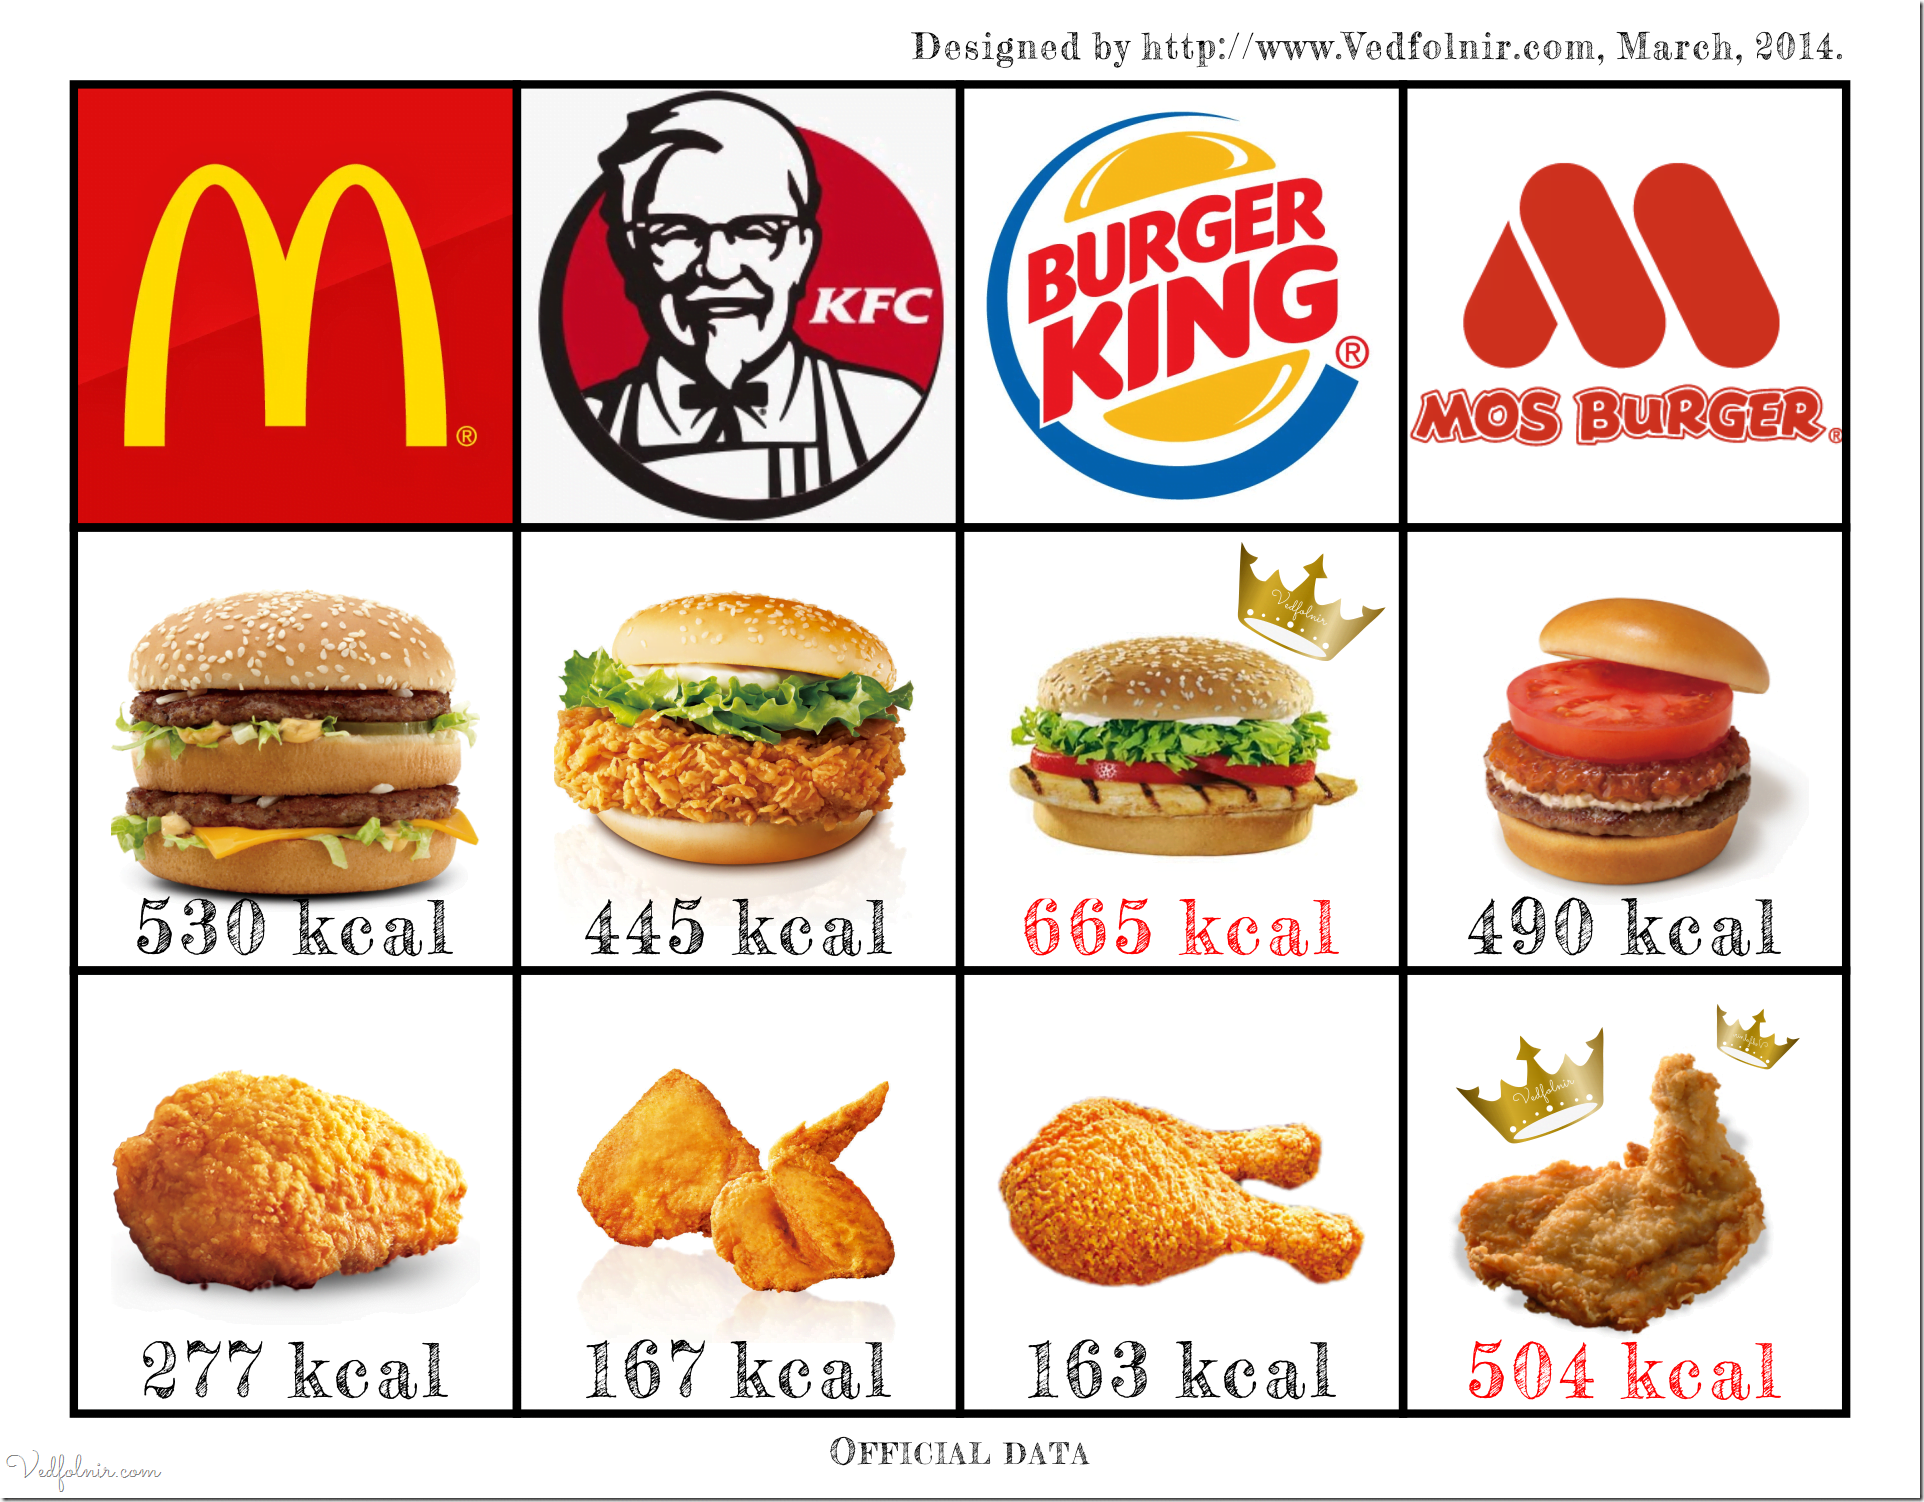 fast-food-mcdonald-kentucky-fried-chicken-kfc-burger-king-mos-burger-calorie-energy-速食-麥當勞-肯德基-漢堡王-摩斯漢堡-雞腿-食物-卡路里-熱量